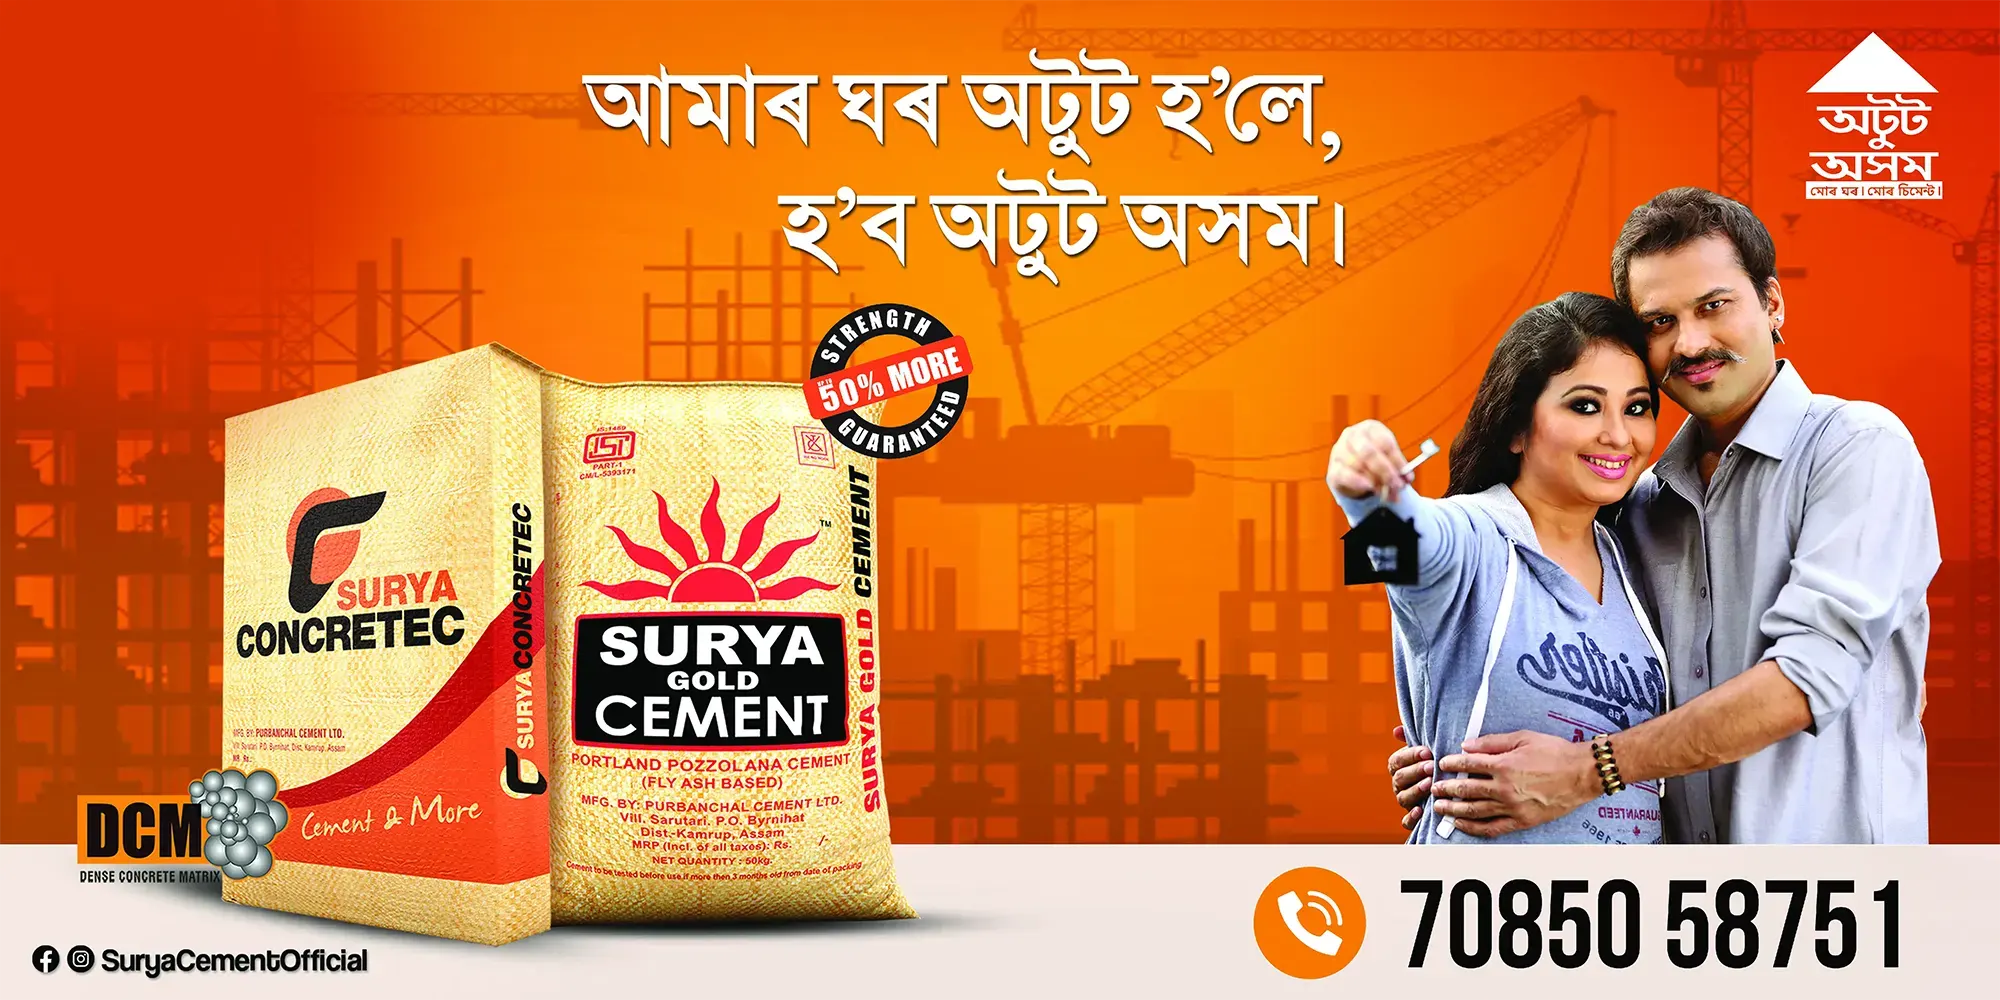 Surya Cement Brand